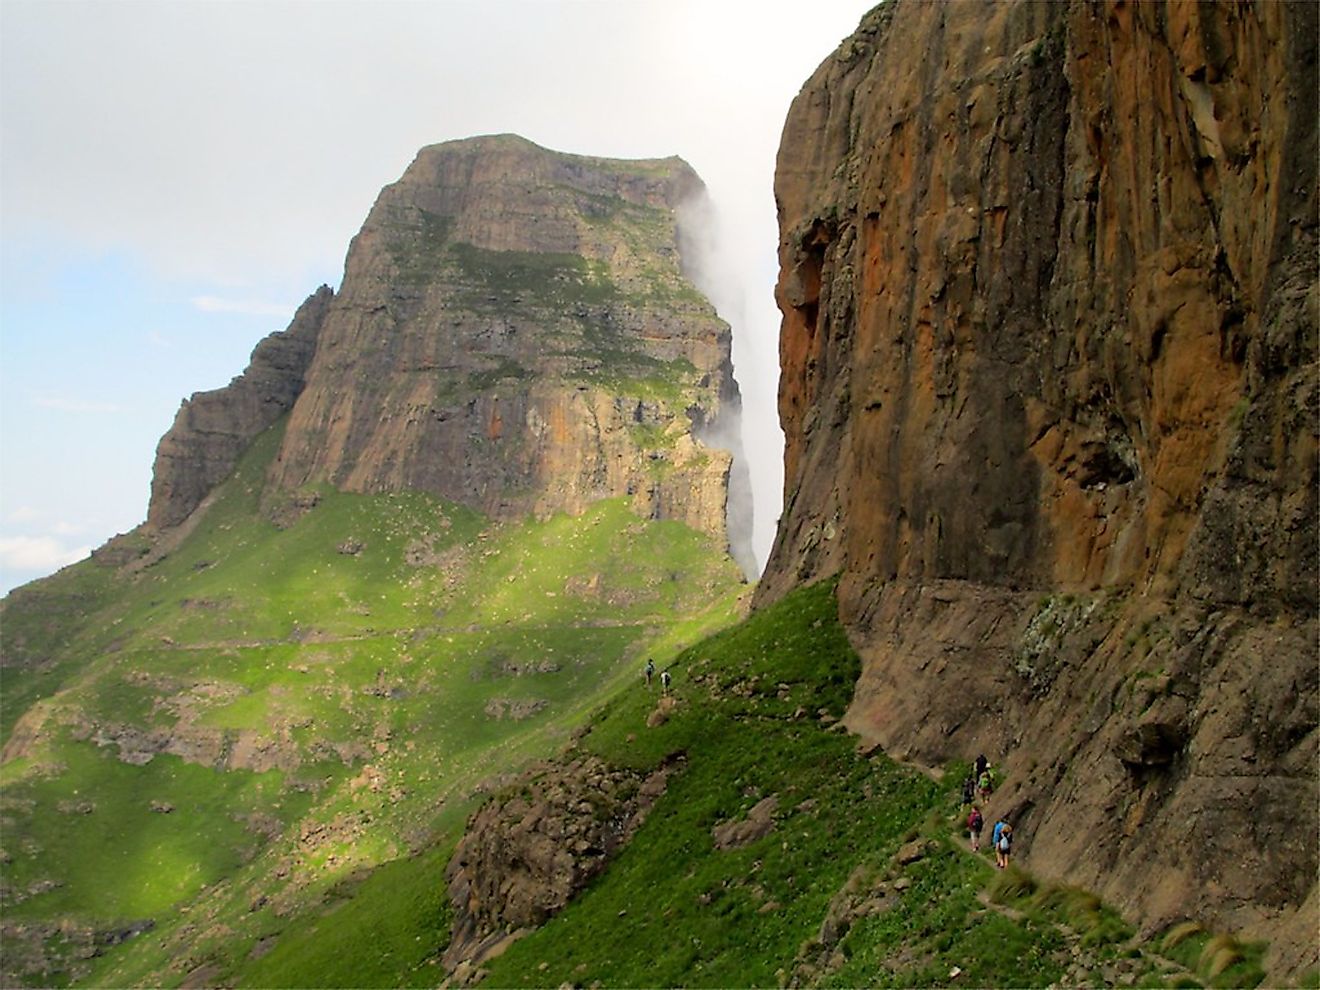 Drakensberg Mountains, South Africa. Image credit: Rick McCharles/Flickr.com